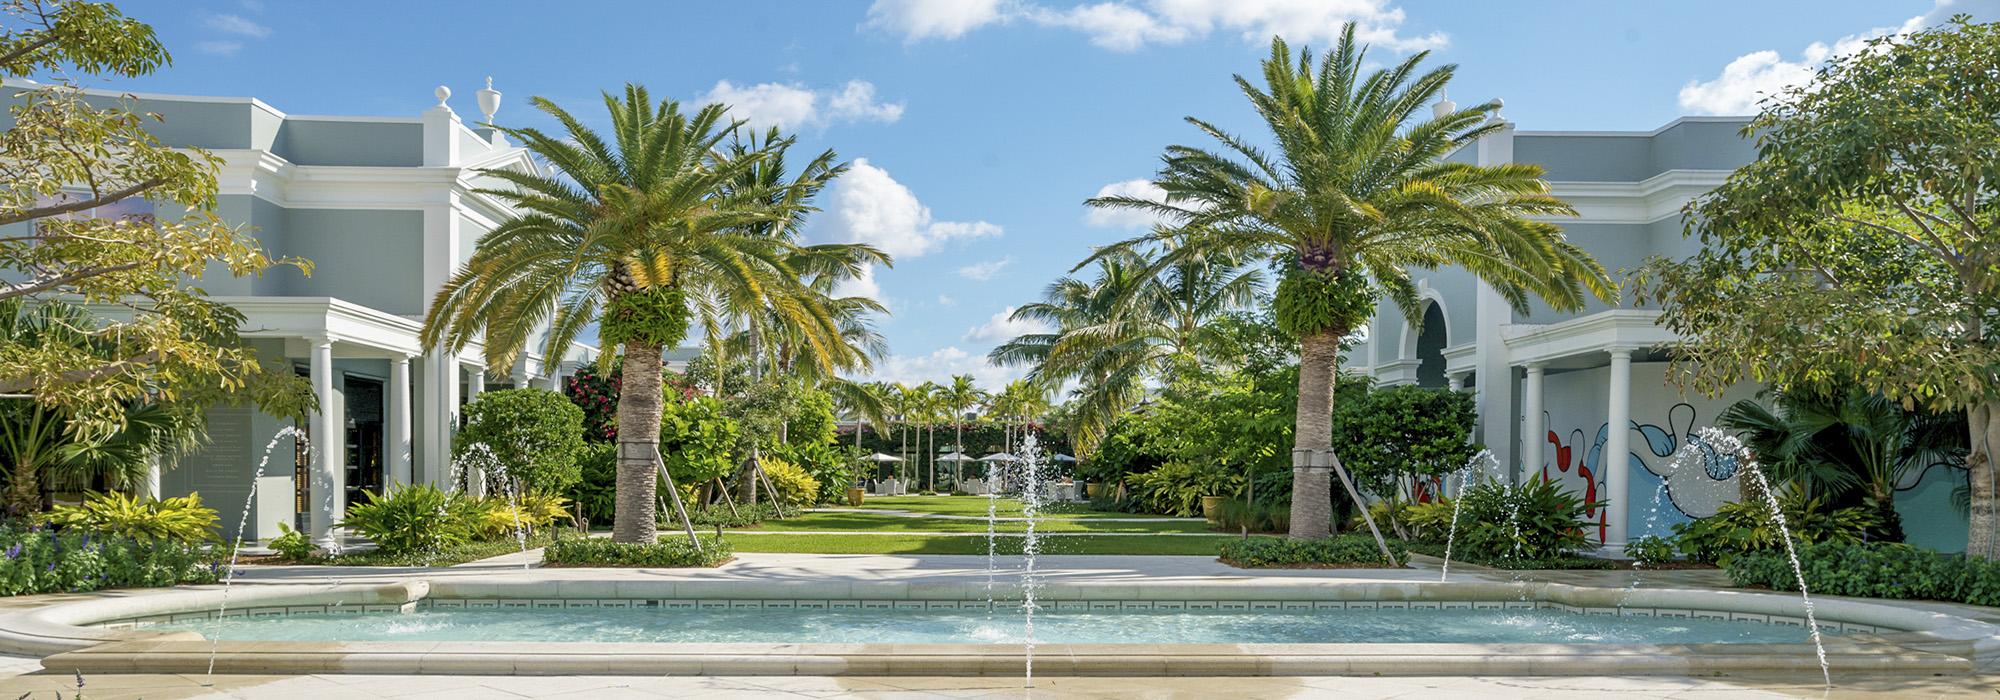 Royal Poinciana Plaza, Palm Beach, FL